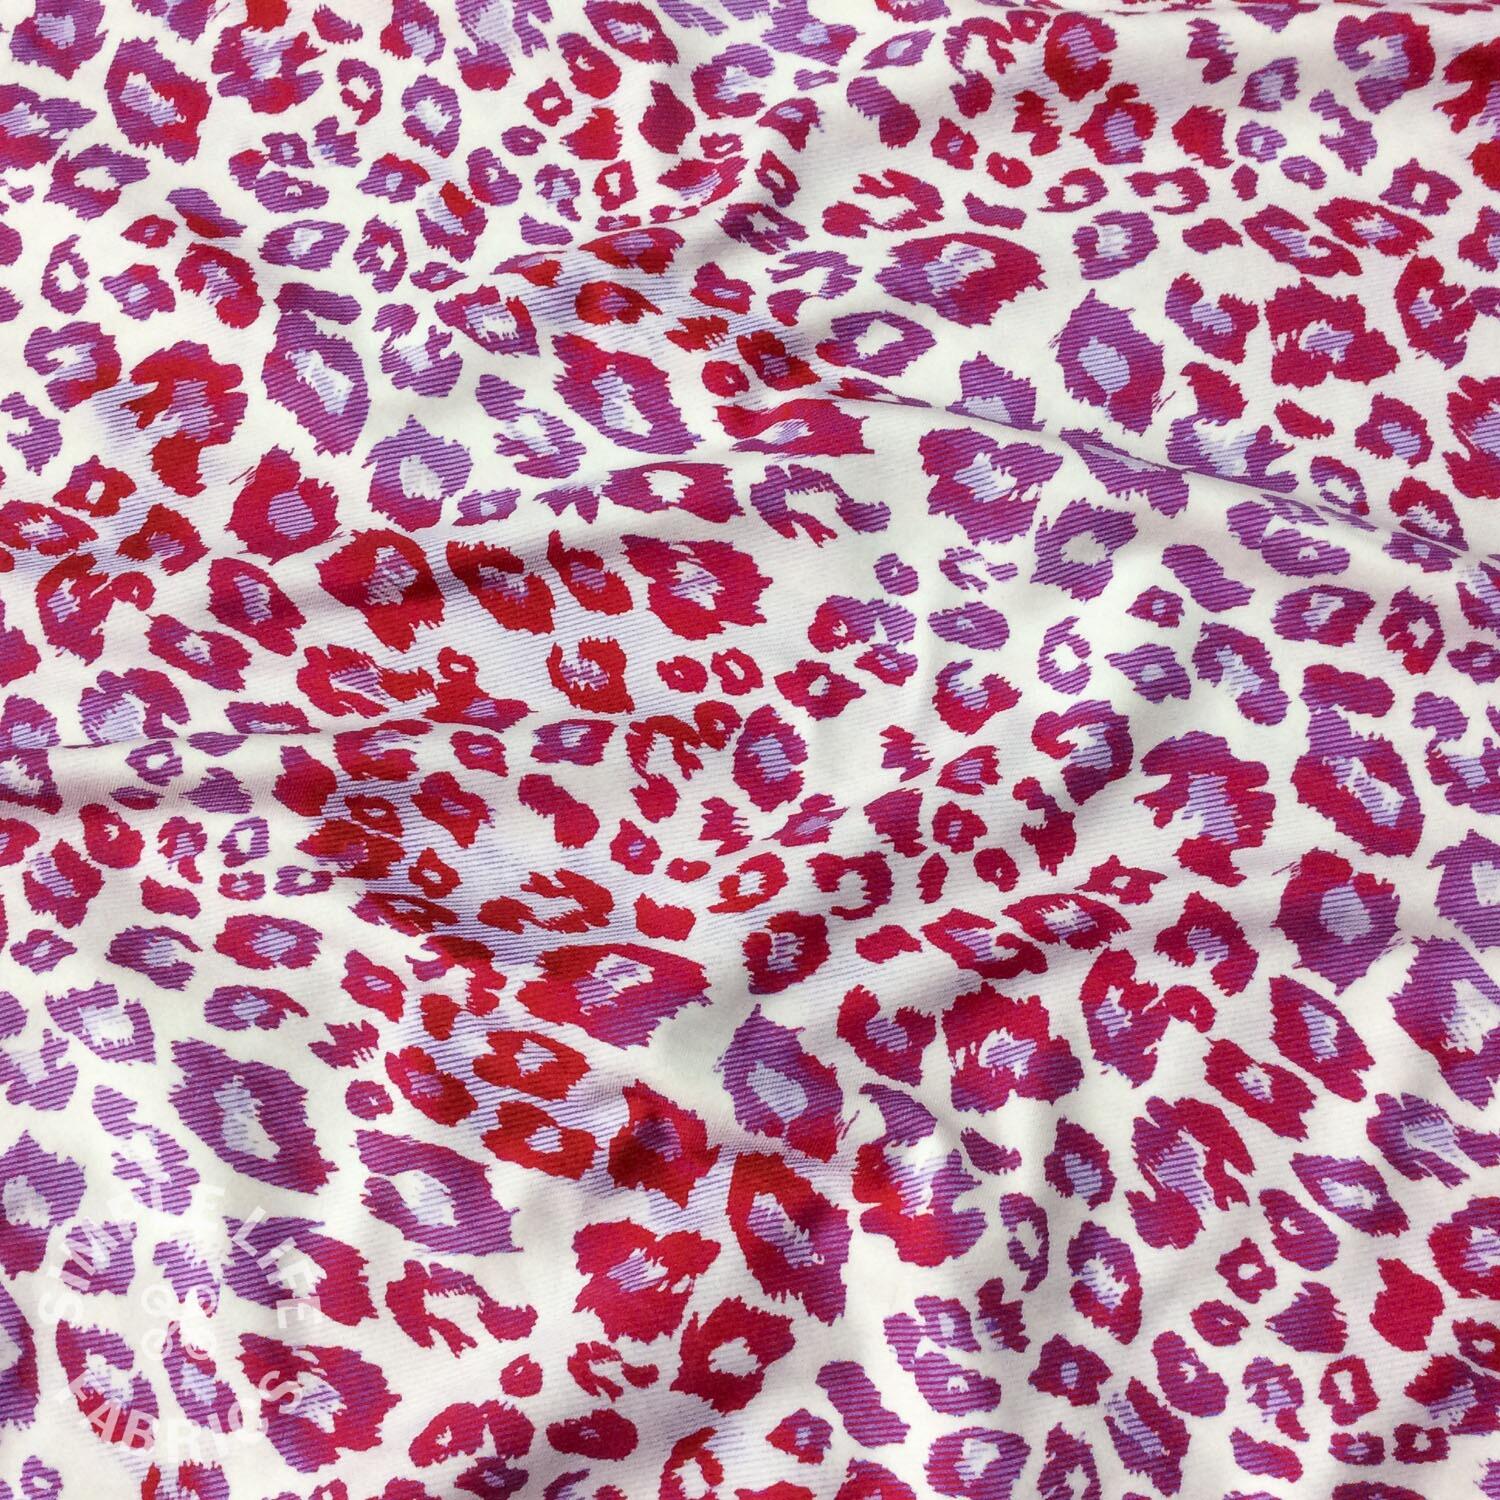 Pink and white animal print fabric